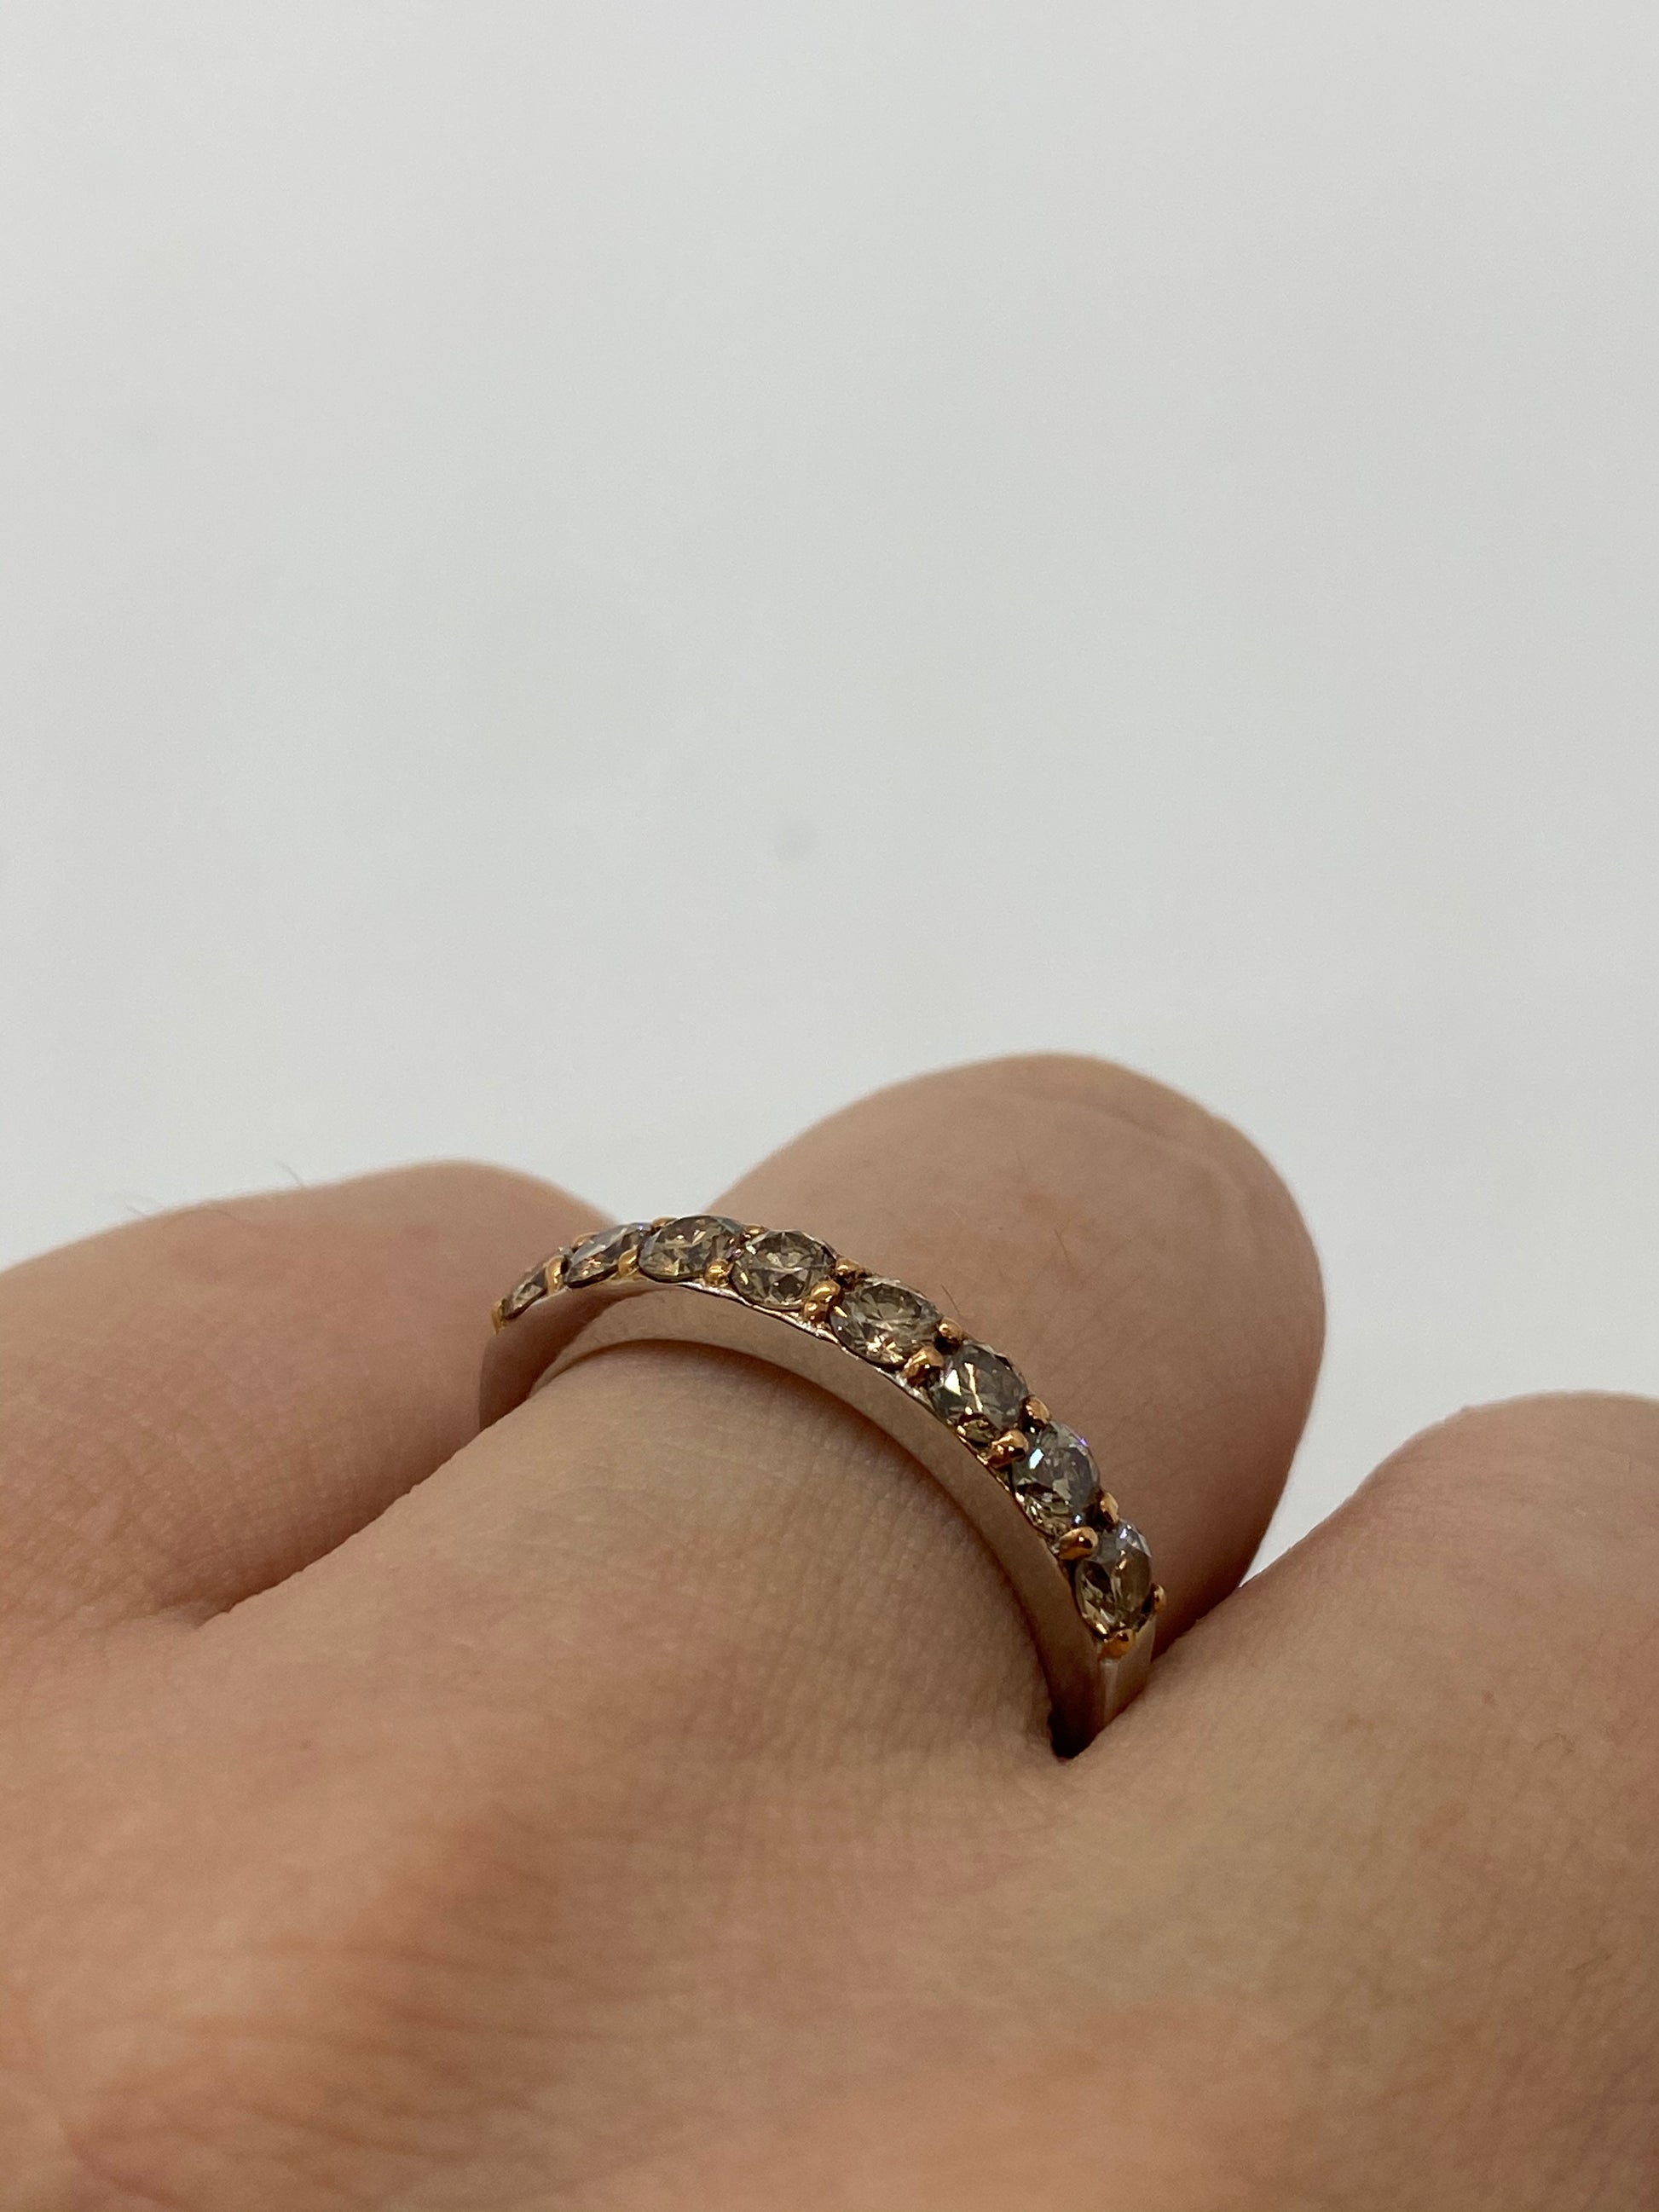 Chocolate Diamond Ring R14020 - Royal Gems and Jewelry